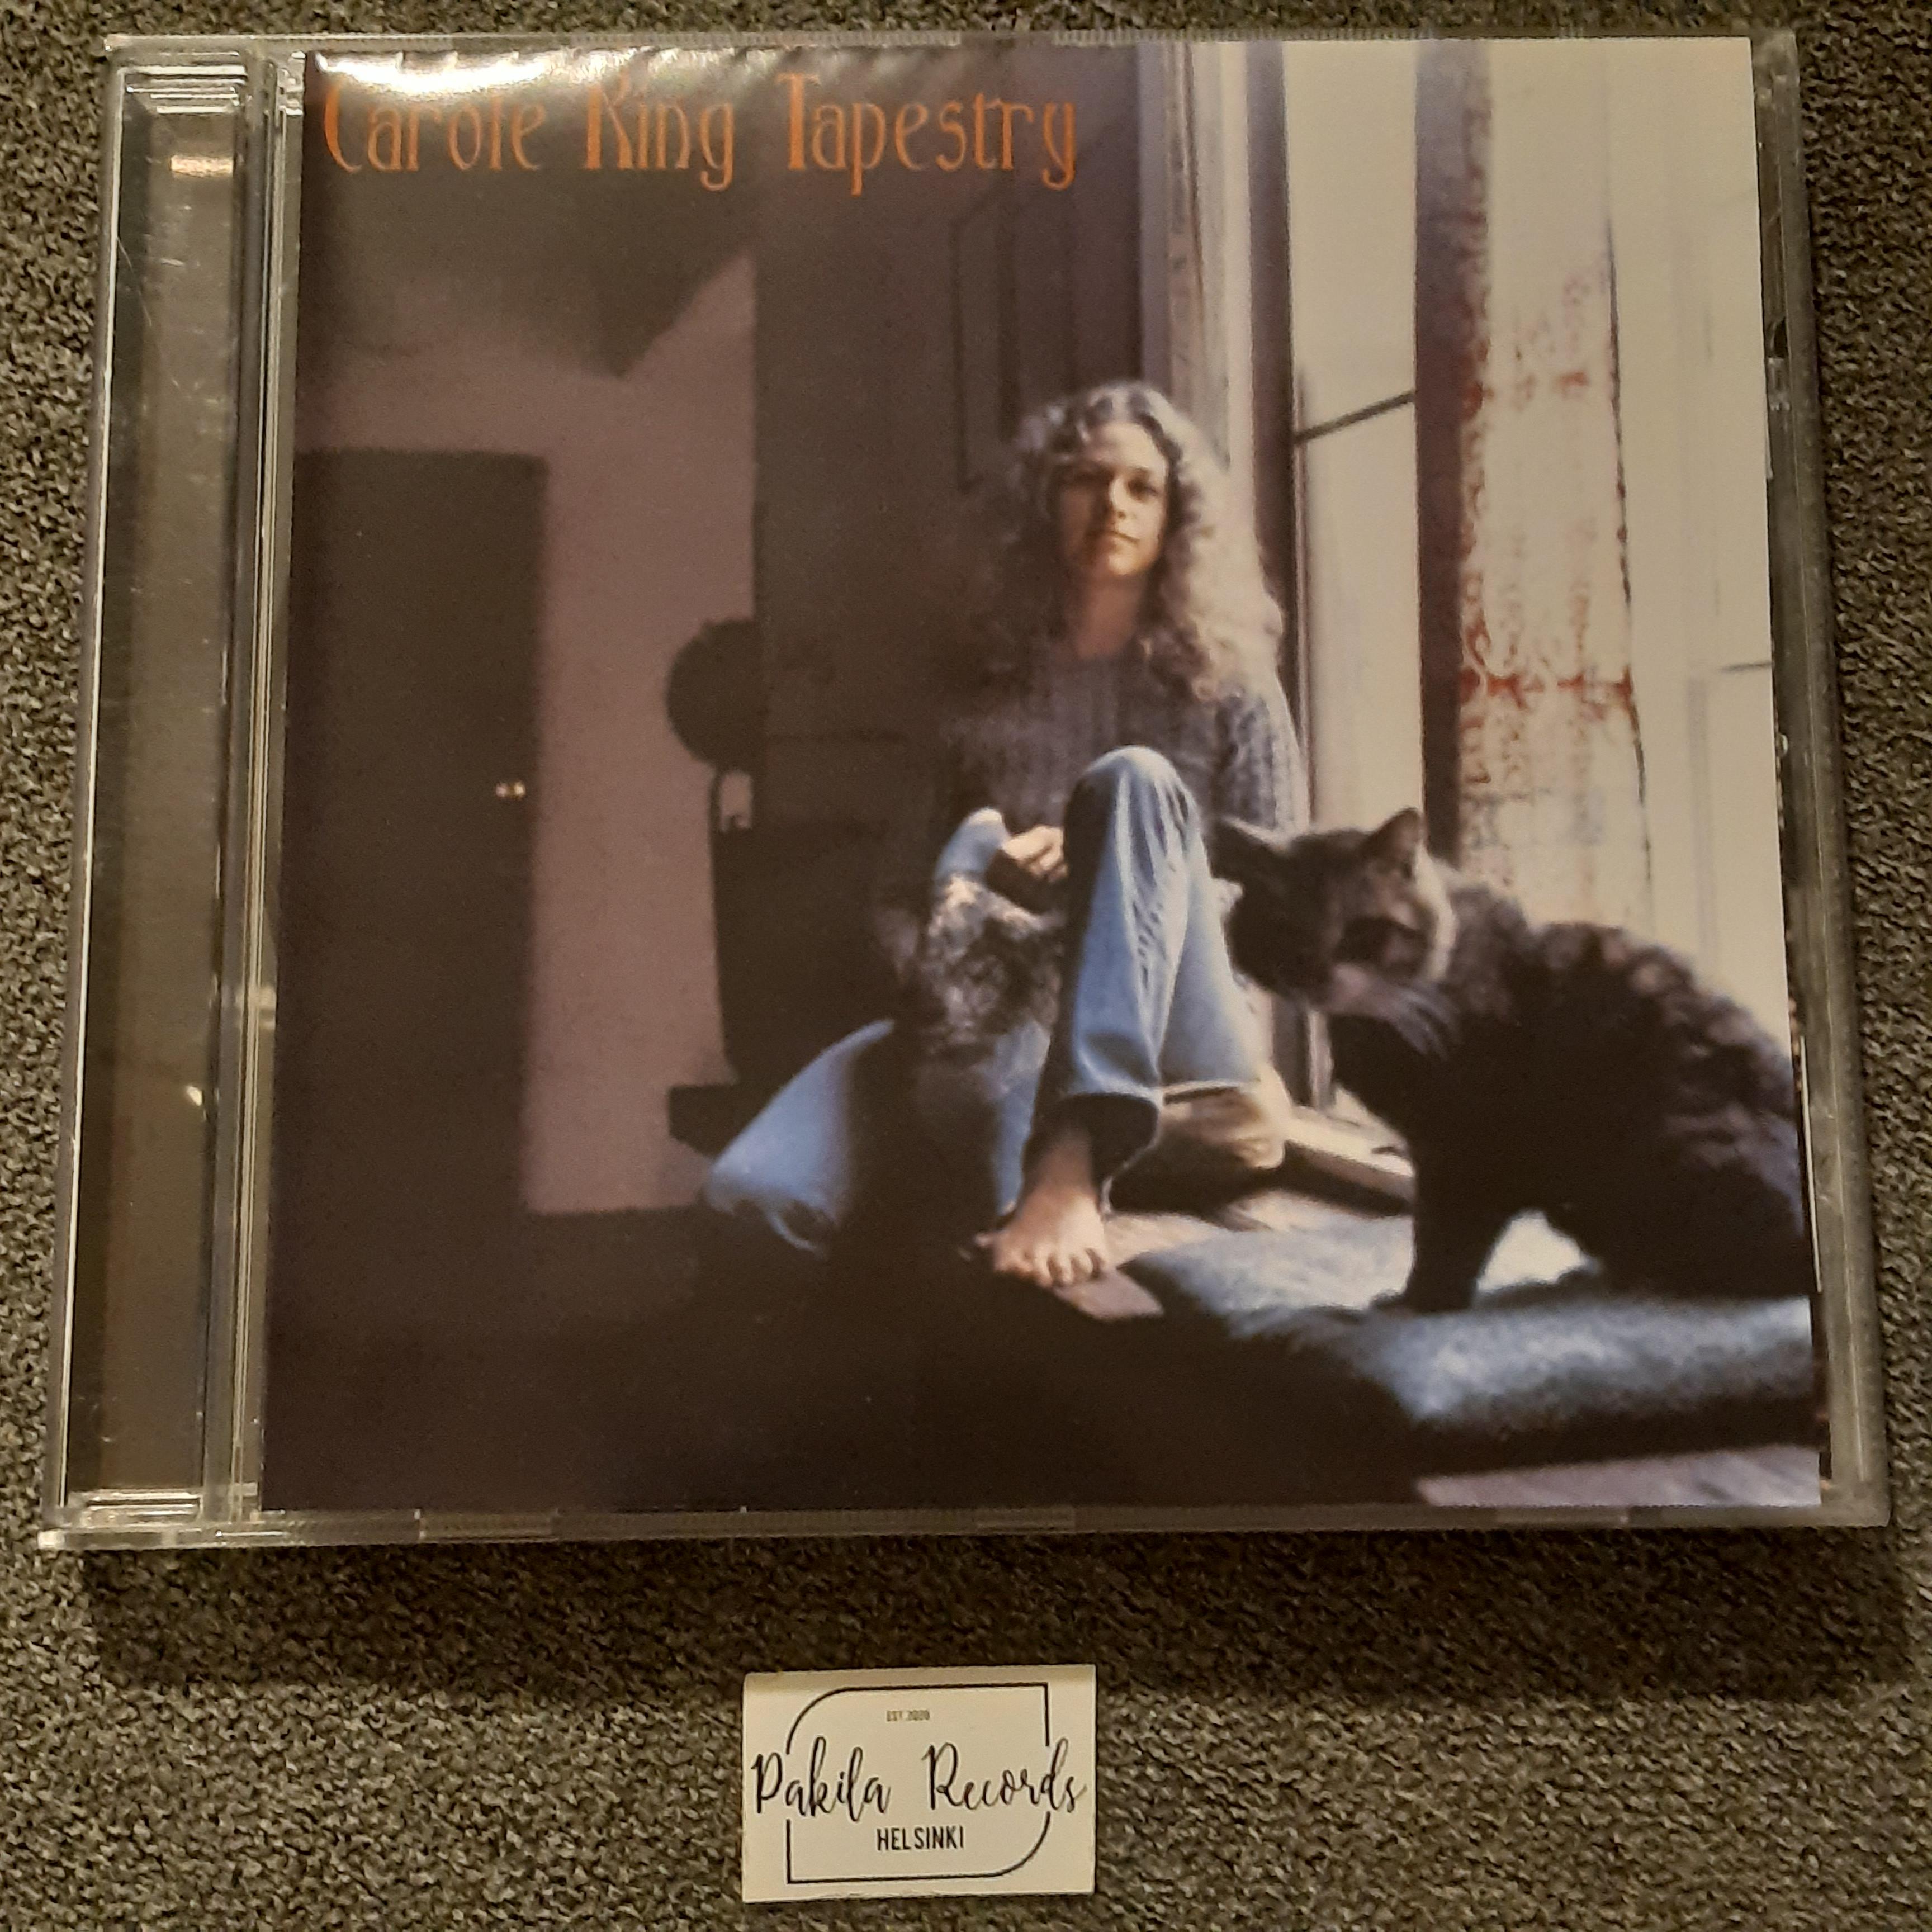 Carole King - Tapestry - CD (käytetty)